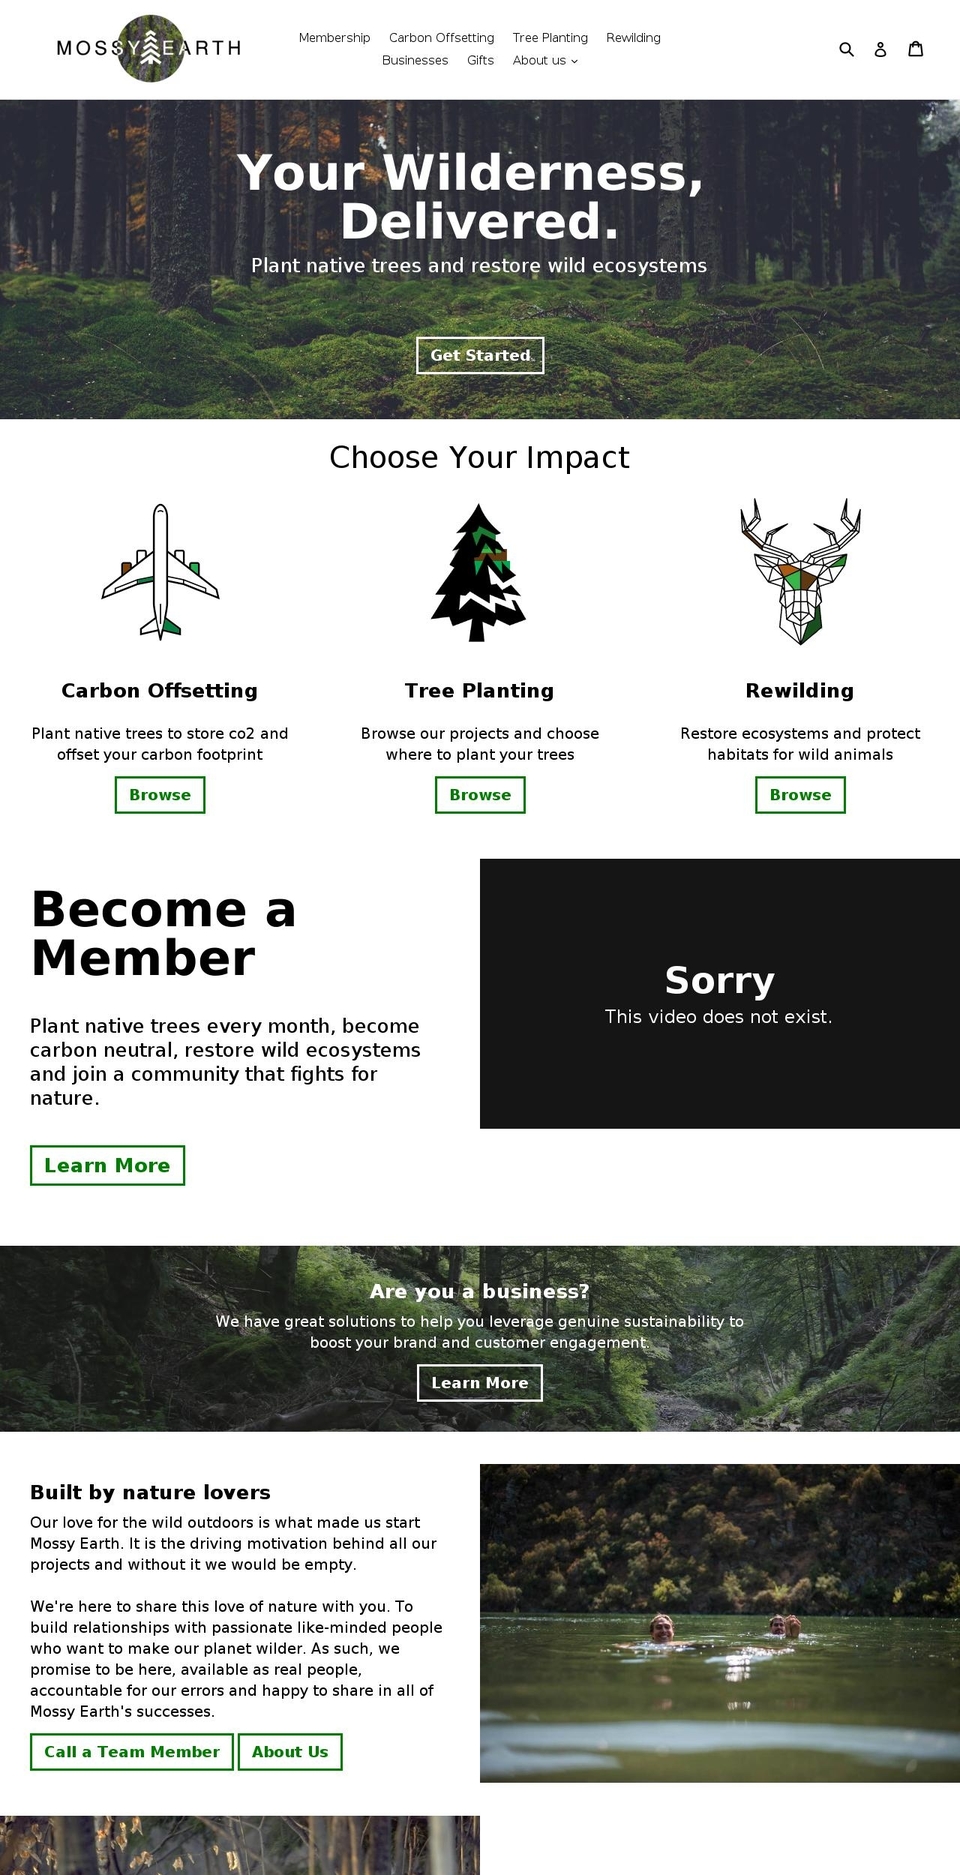 mossy.earth shopify website screenshot